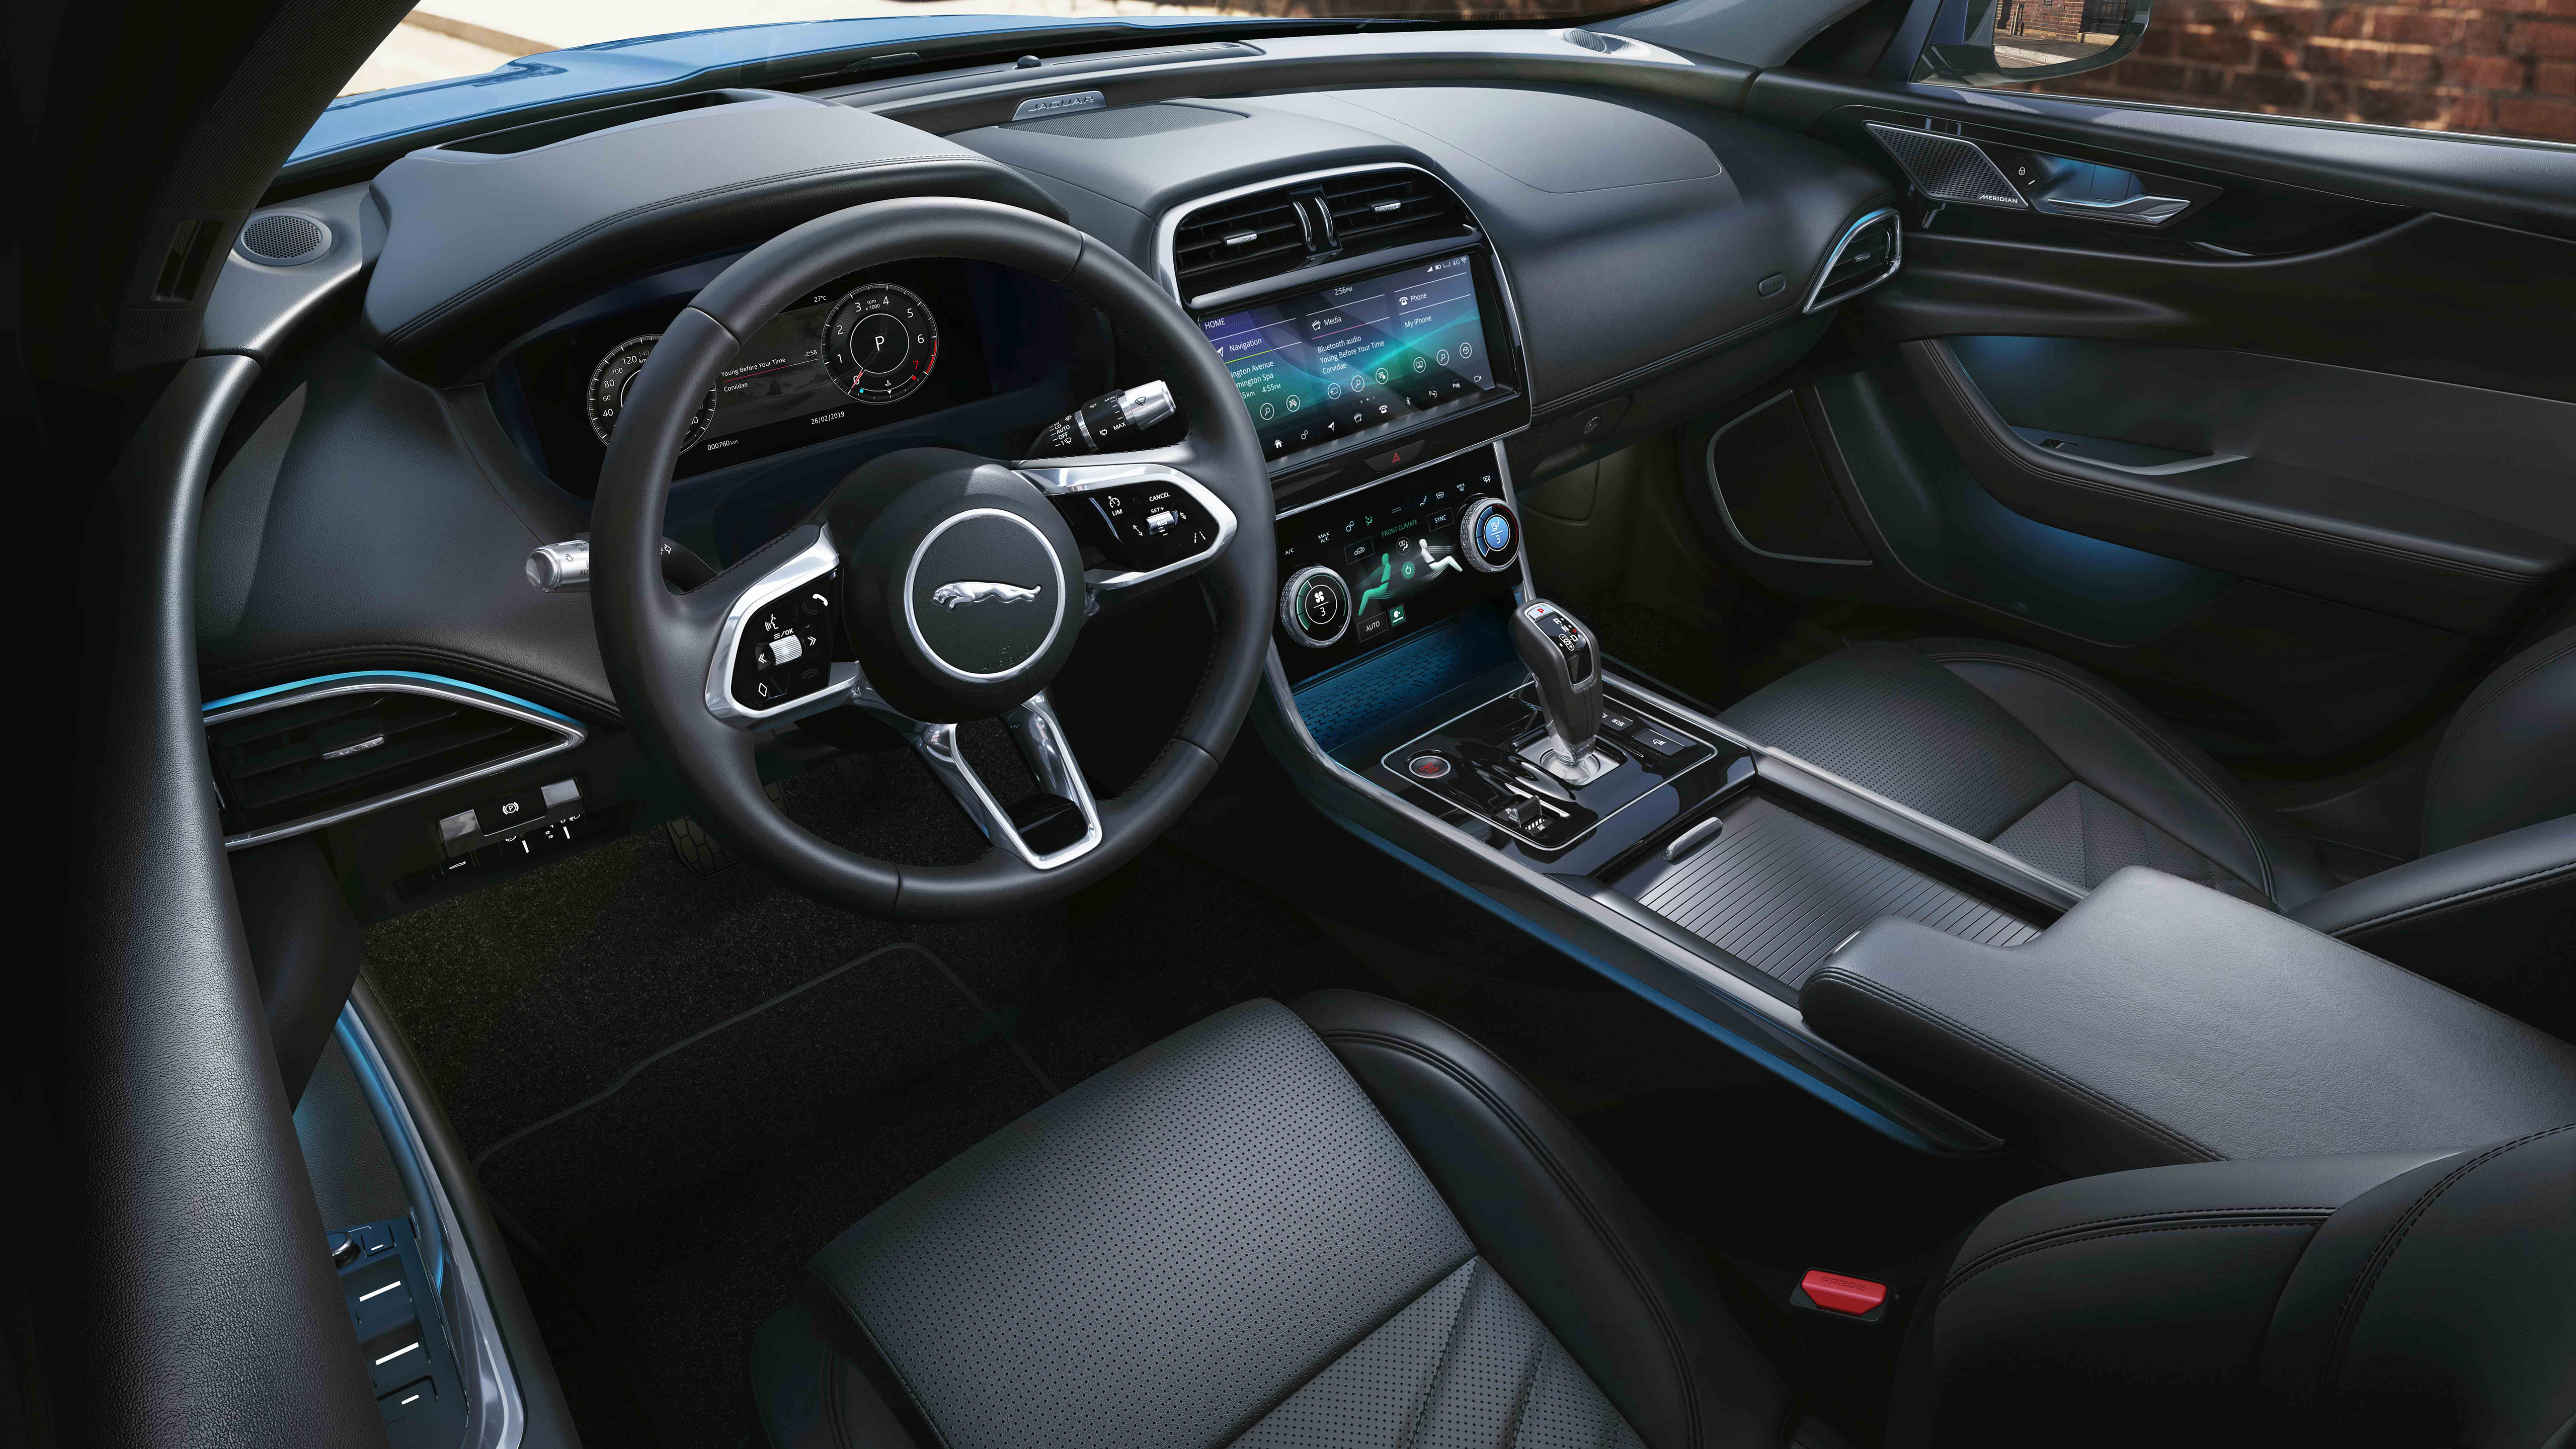 Jaguar XE exterior specifications